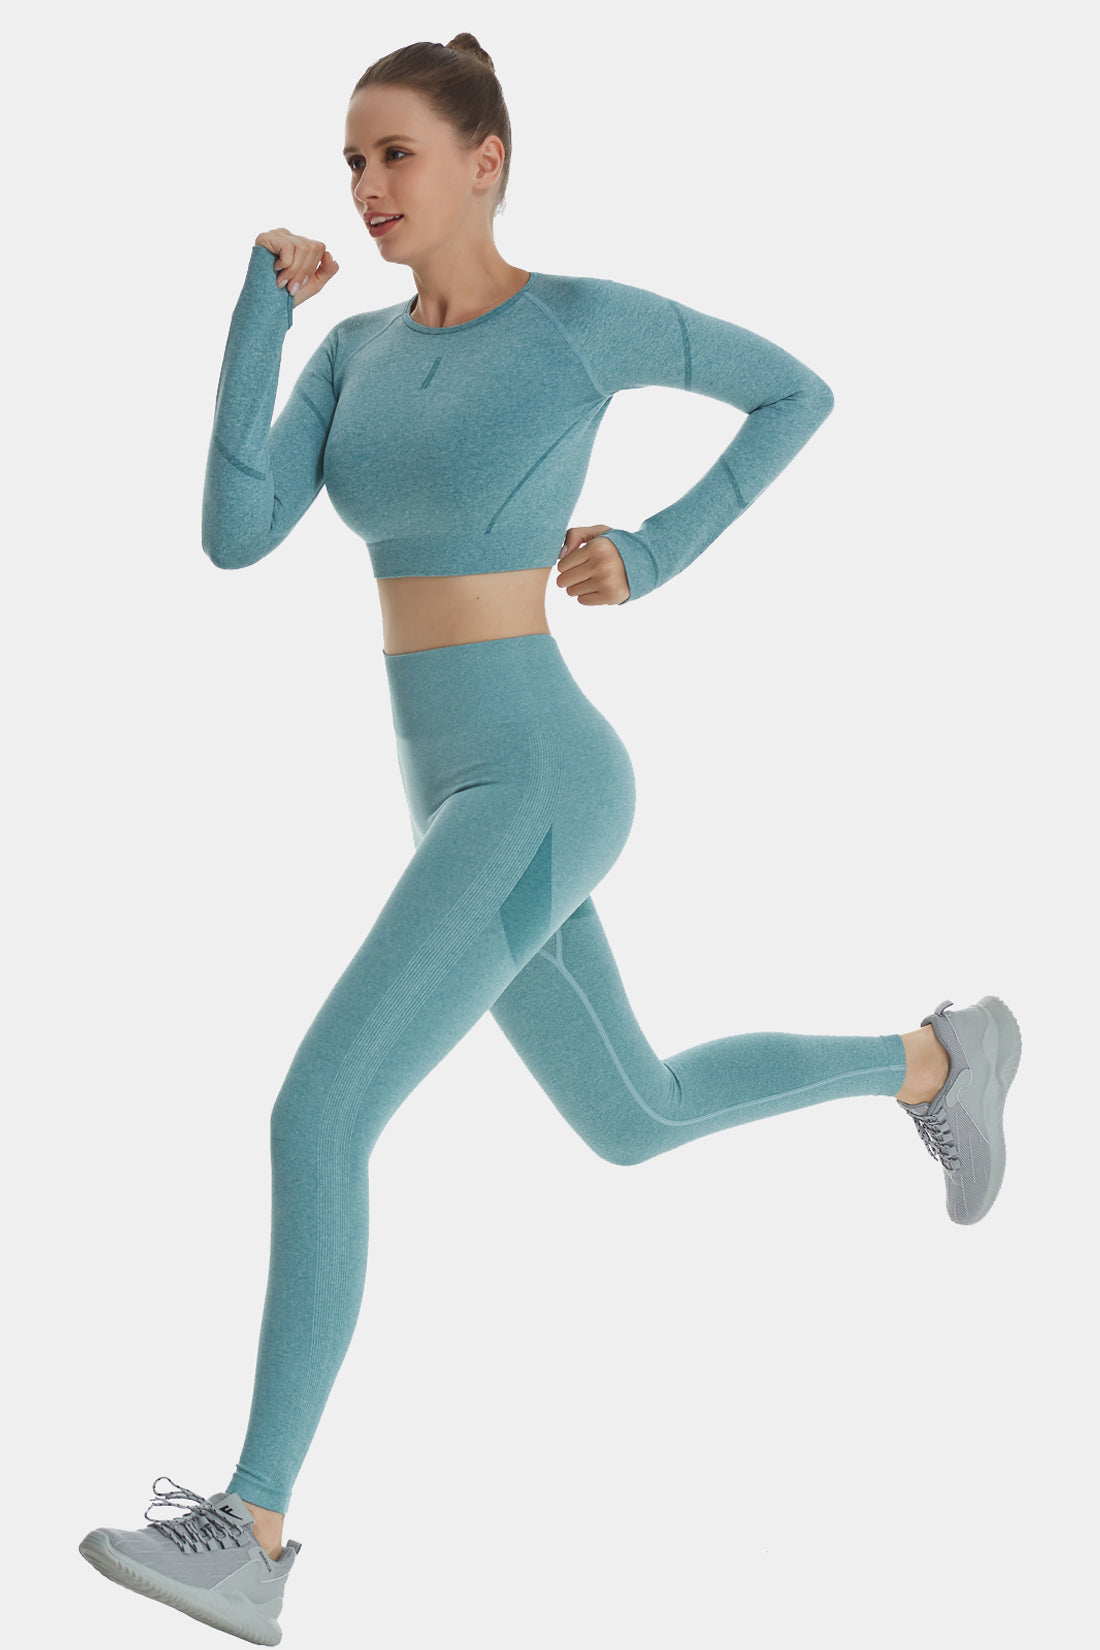 Women 2pcs Seamless Yoga Set Sport Suit Gymwear Workout Clothes Long –  Girspt